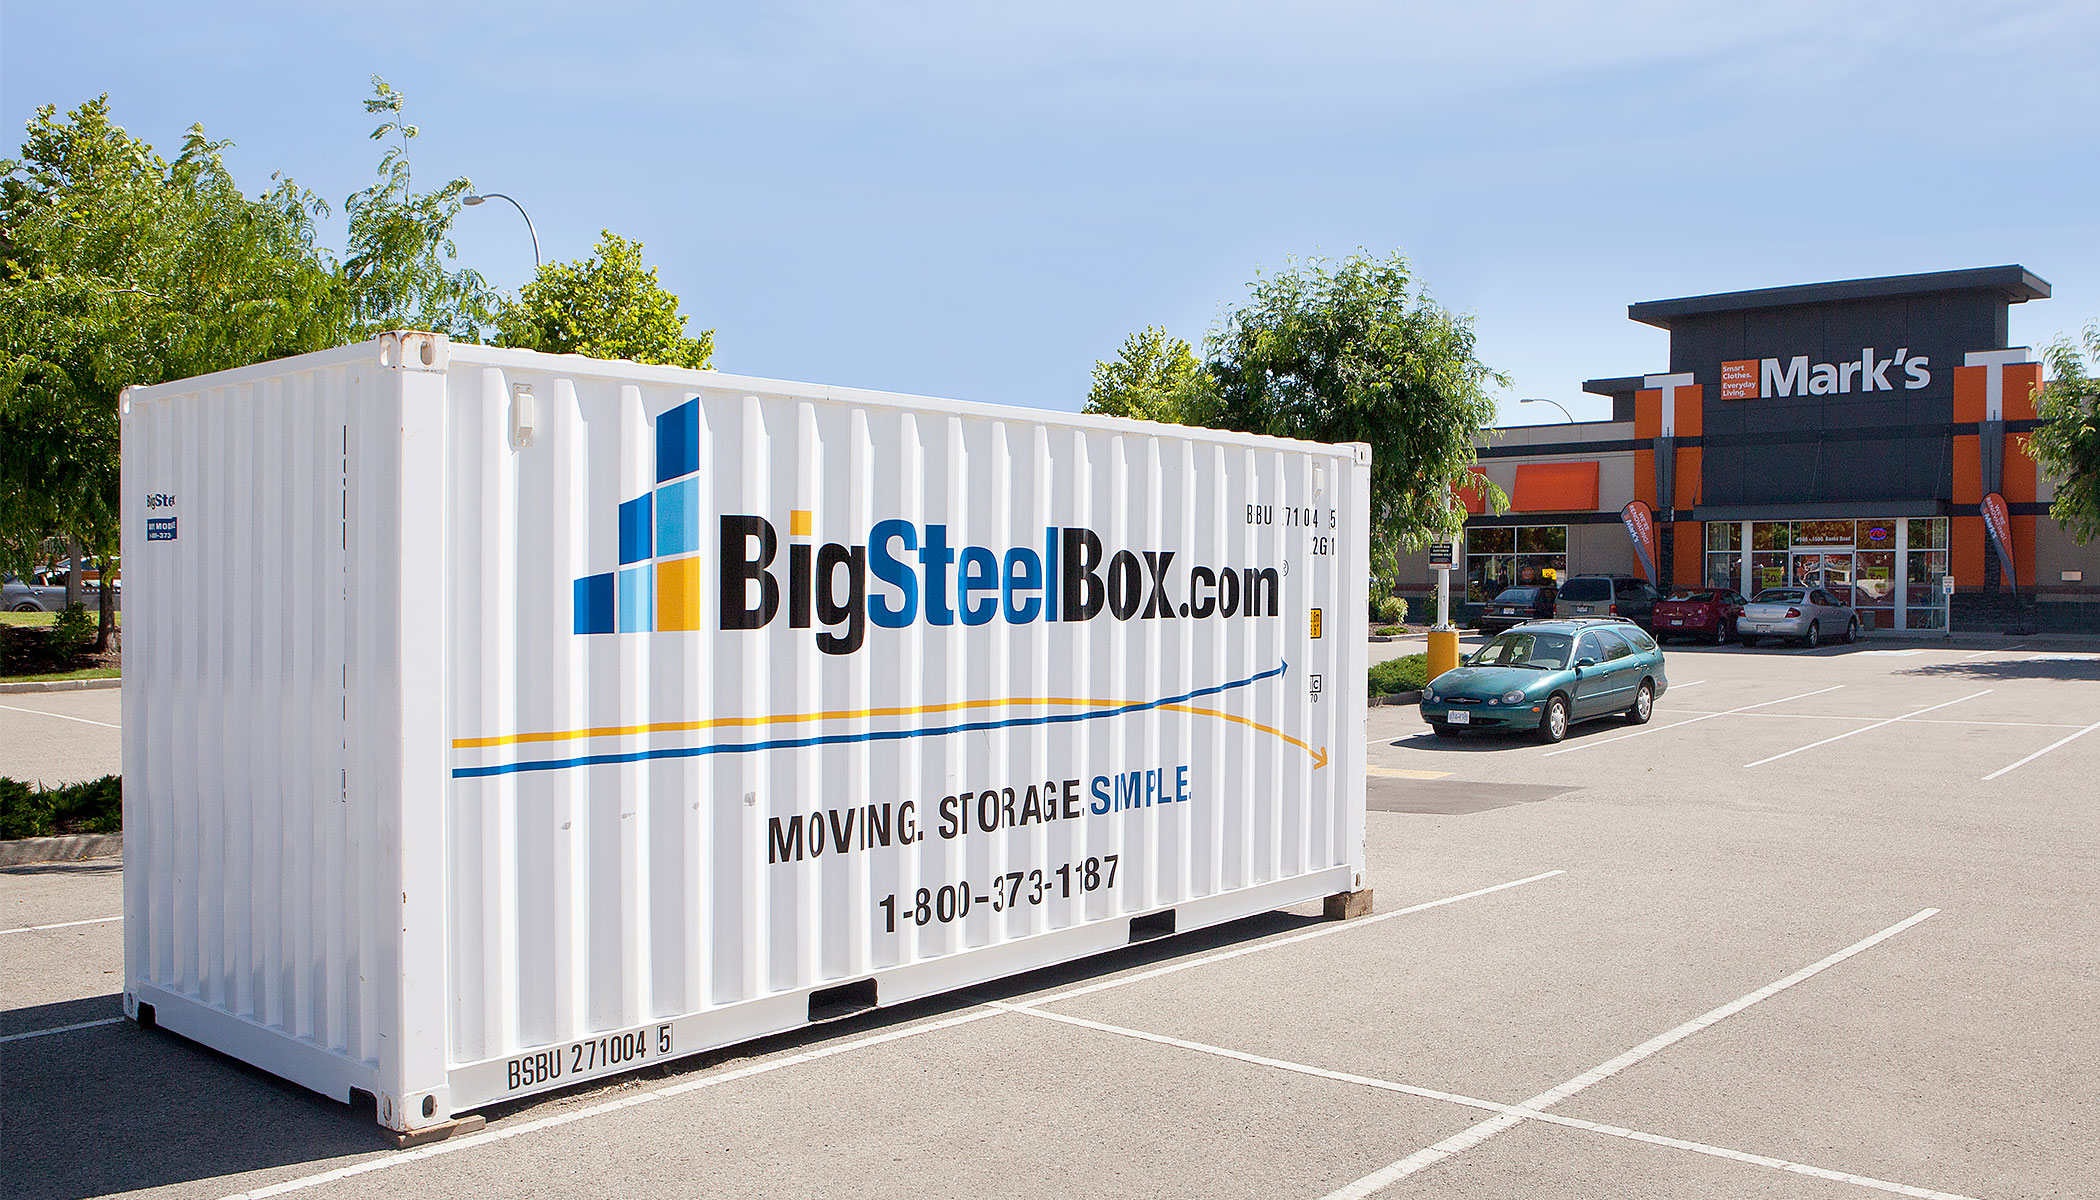 Portable storage for business renovations and seasonal storage - BigSteelBox